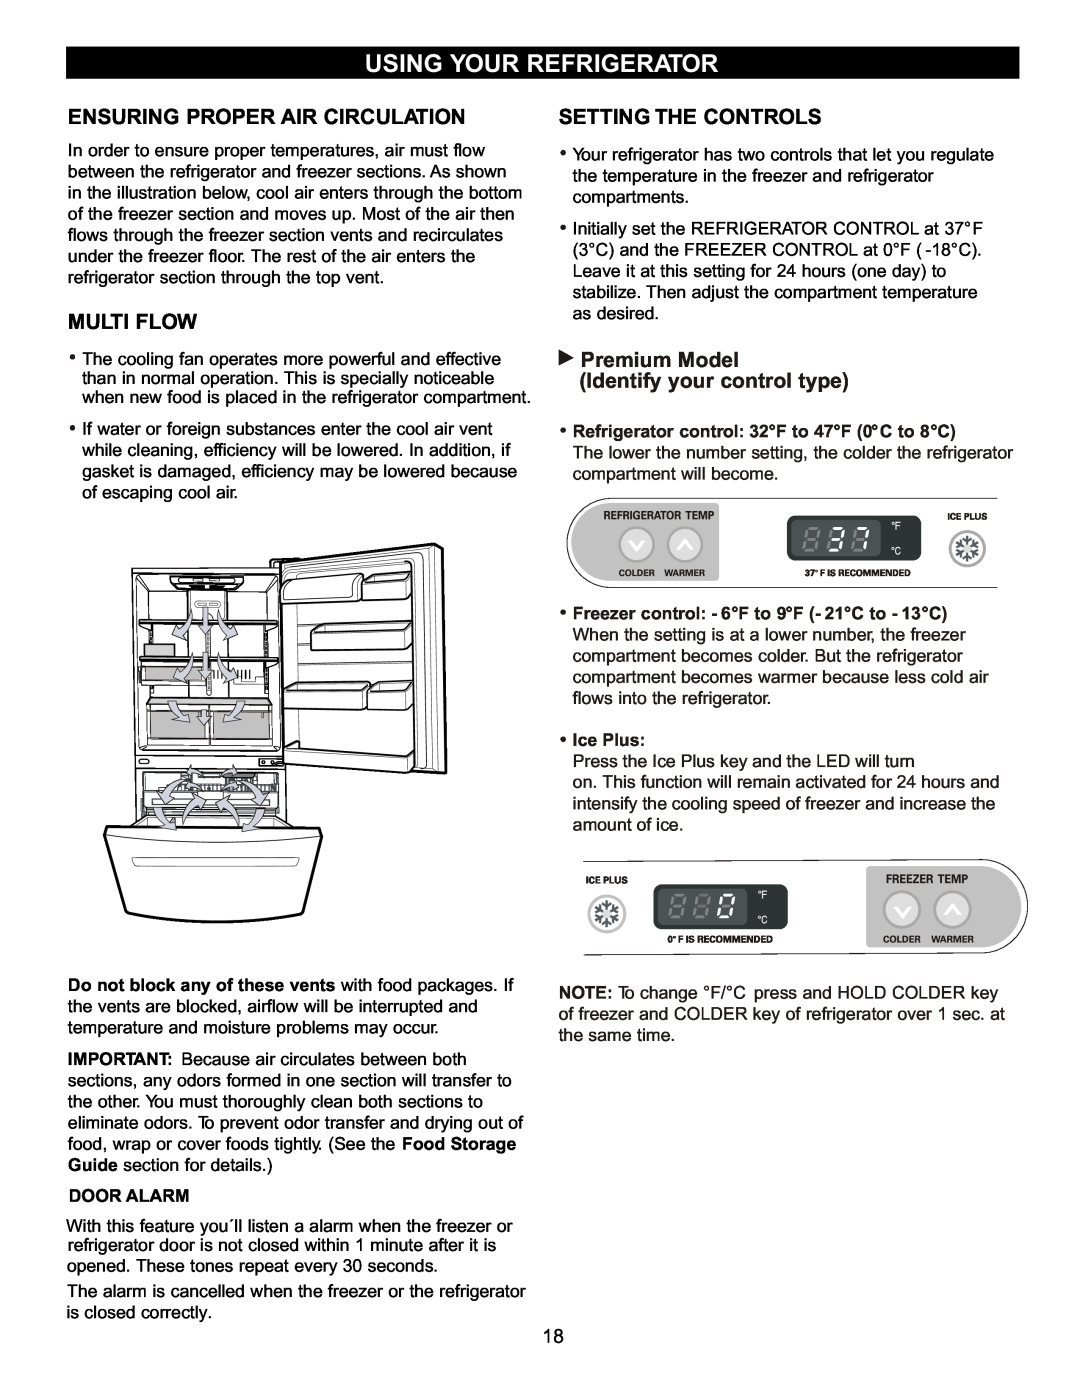 LG Electronics LRBC2051 Using Your Refrigerator, Ensuring Proper Air Circulation, Multi Flow, Setting The Controls 